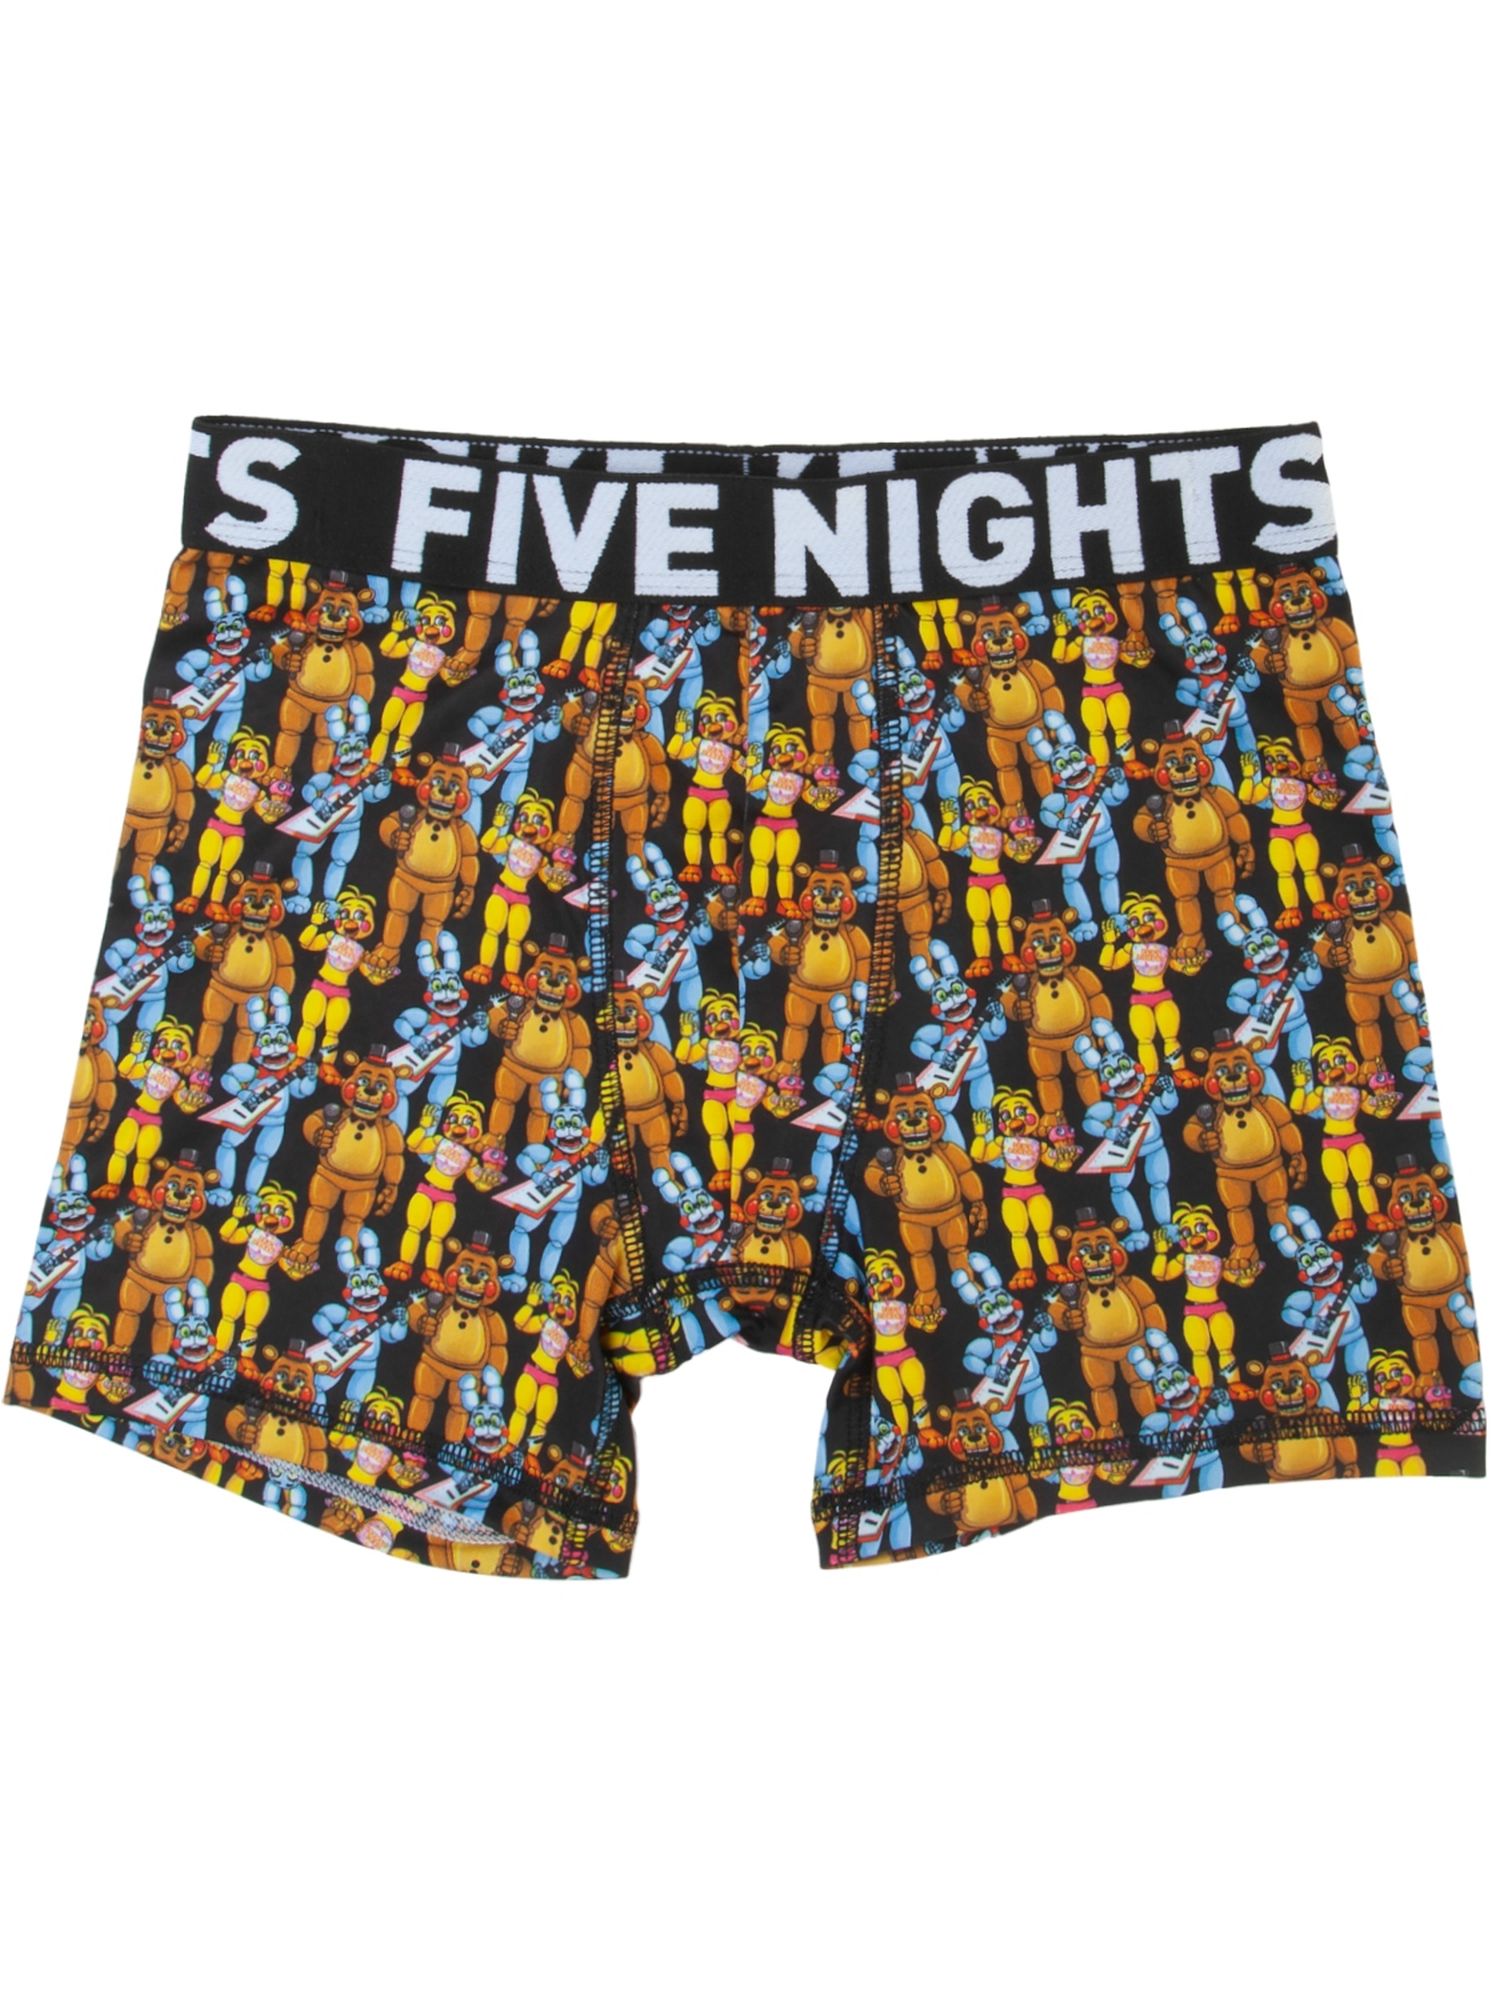 Bioworld Boys Five Nights At Freddy's 3pc Boxer Shorts Set Underwear Boxer Briefs XS 4